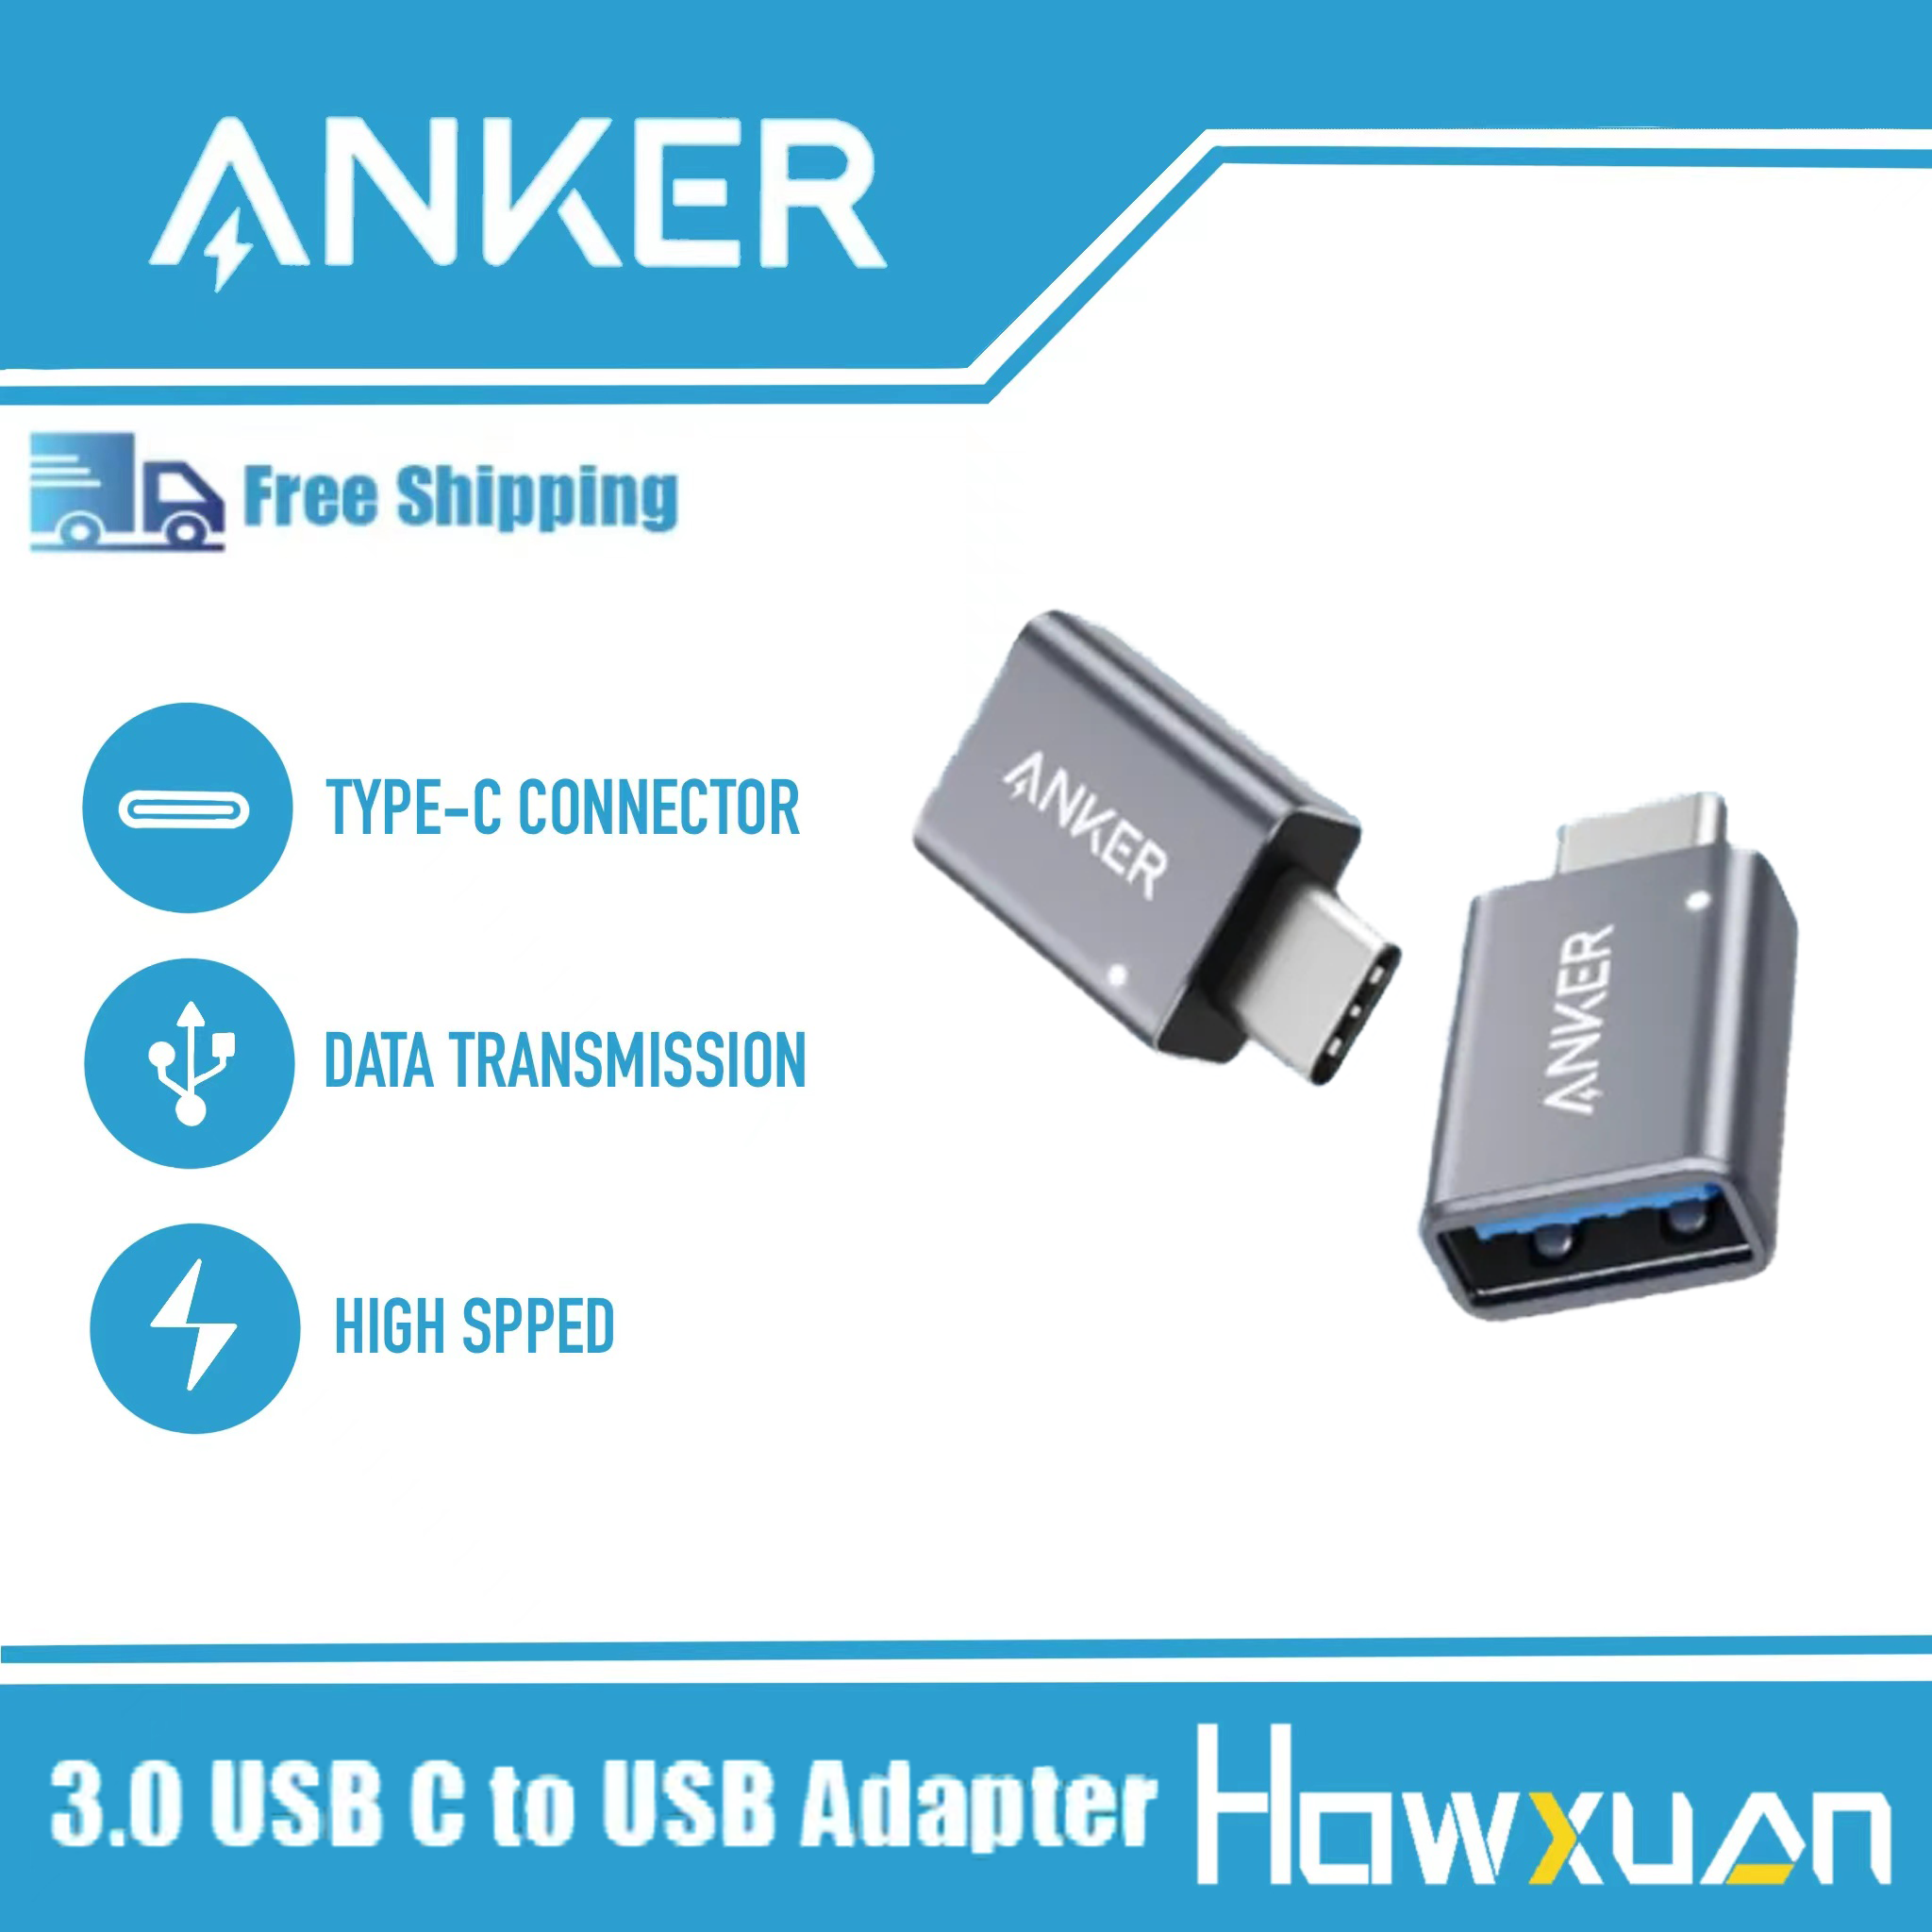 Anker USB C to USB Adapter USB C AdapterHigh-Speed Data Transfer, USB